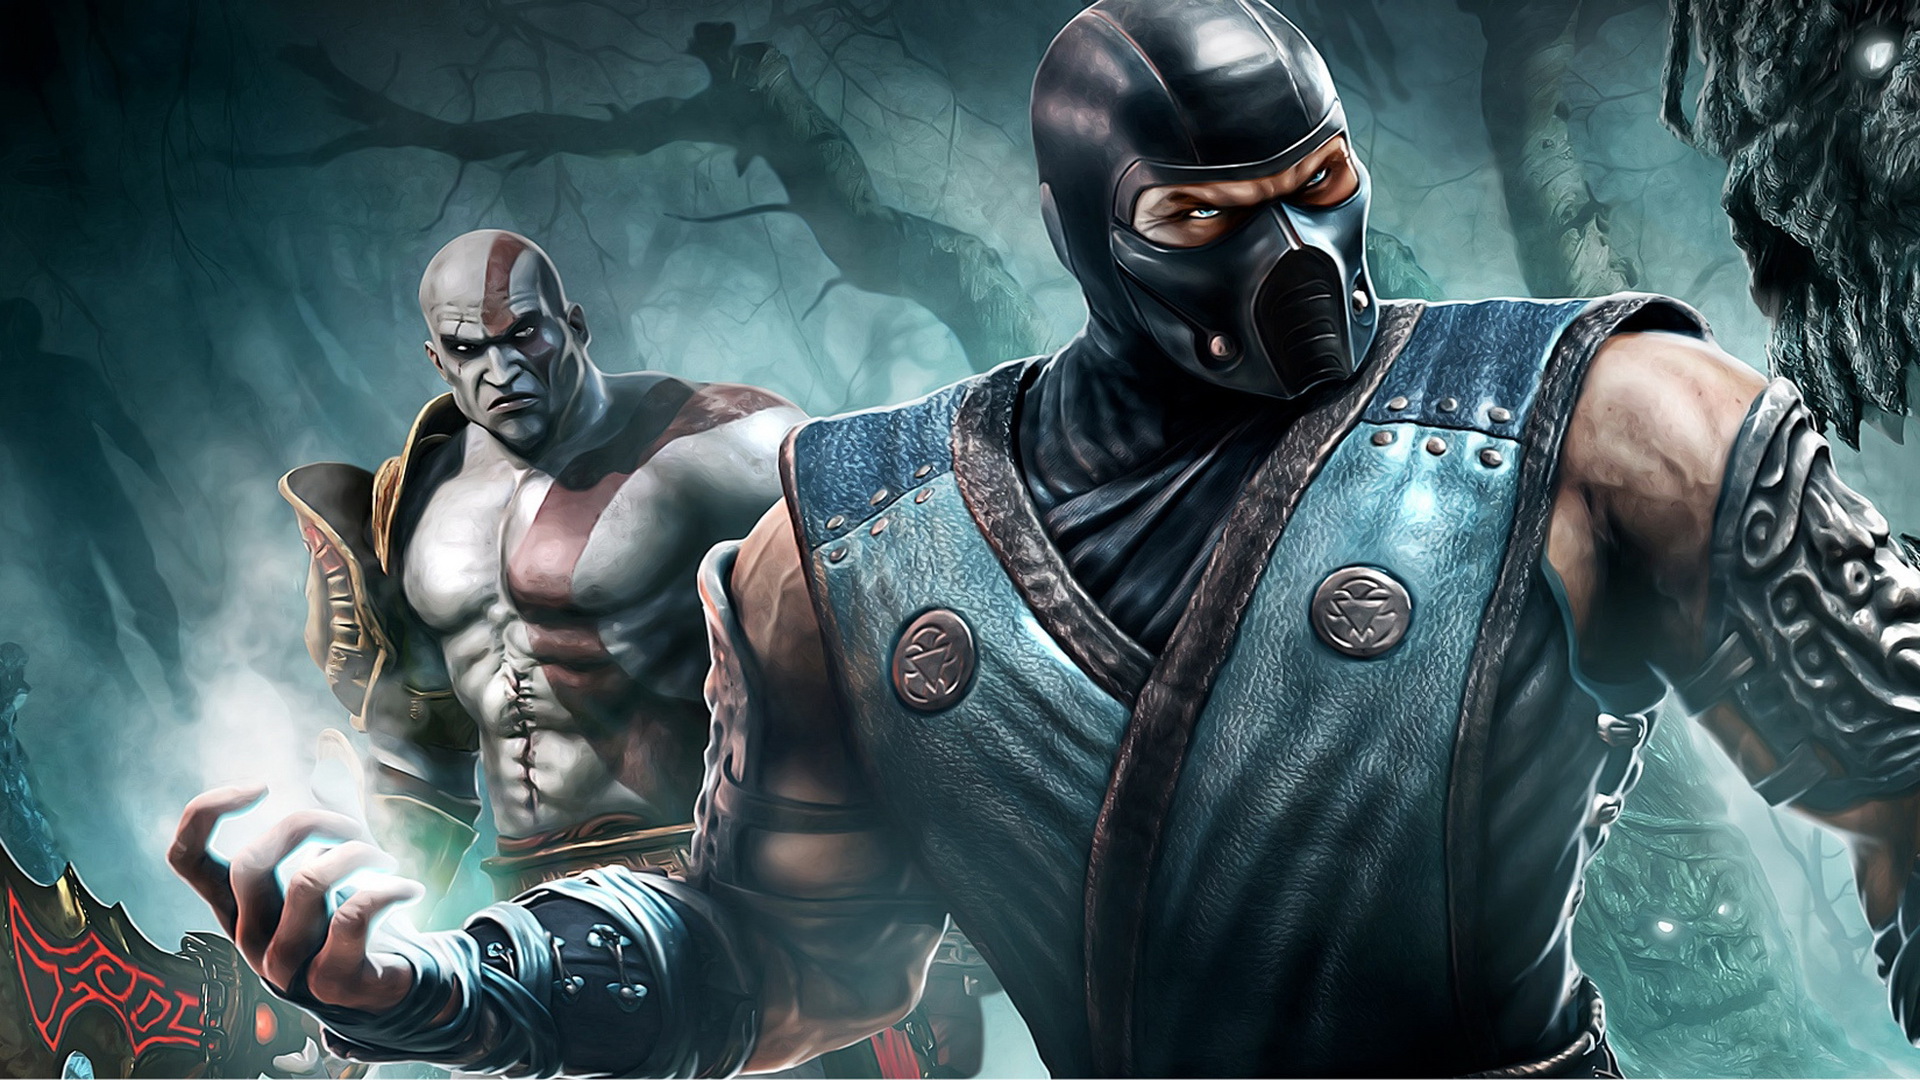 Mortal Kombat Kratos And Sub Zero Wallpaper Playstation